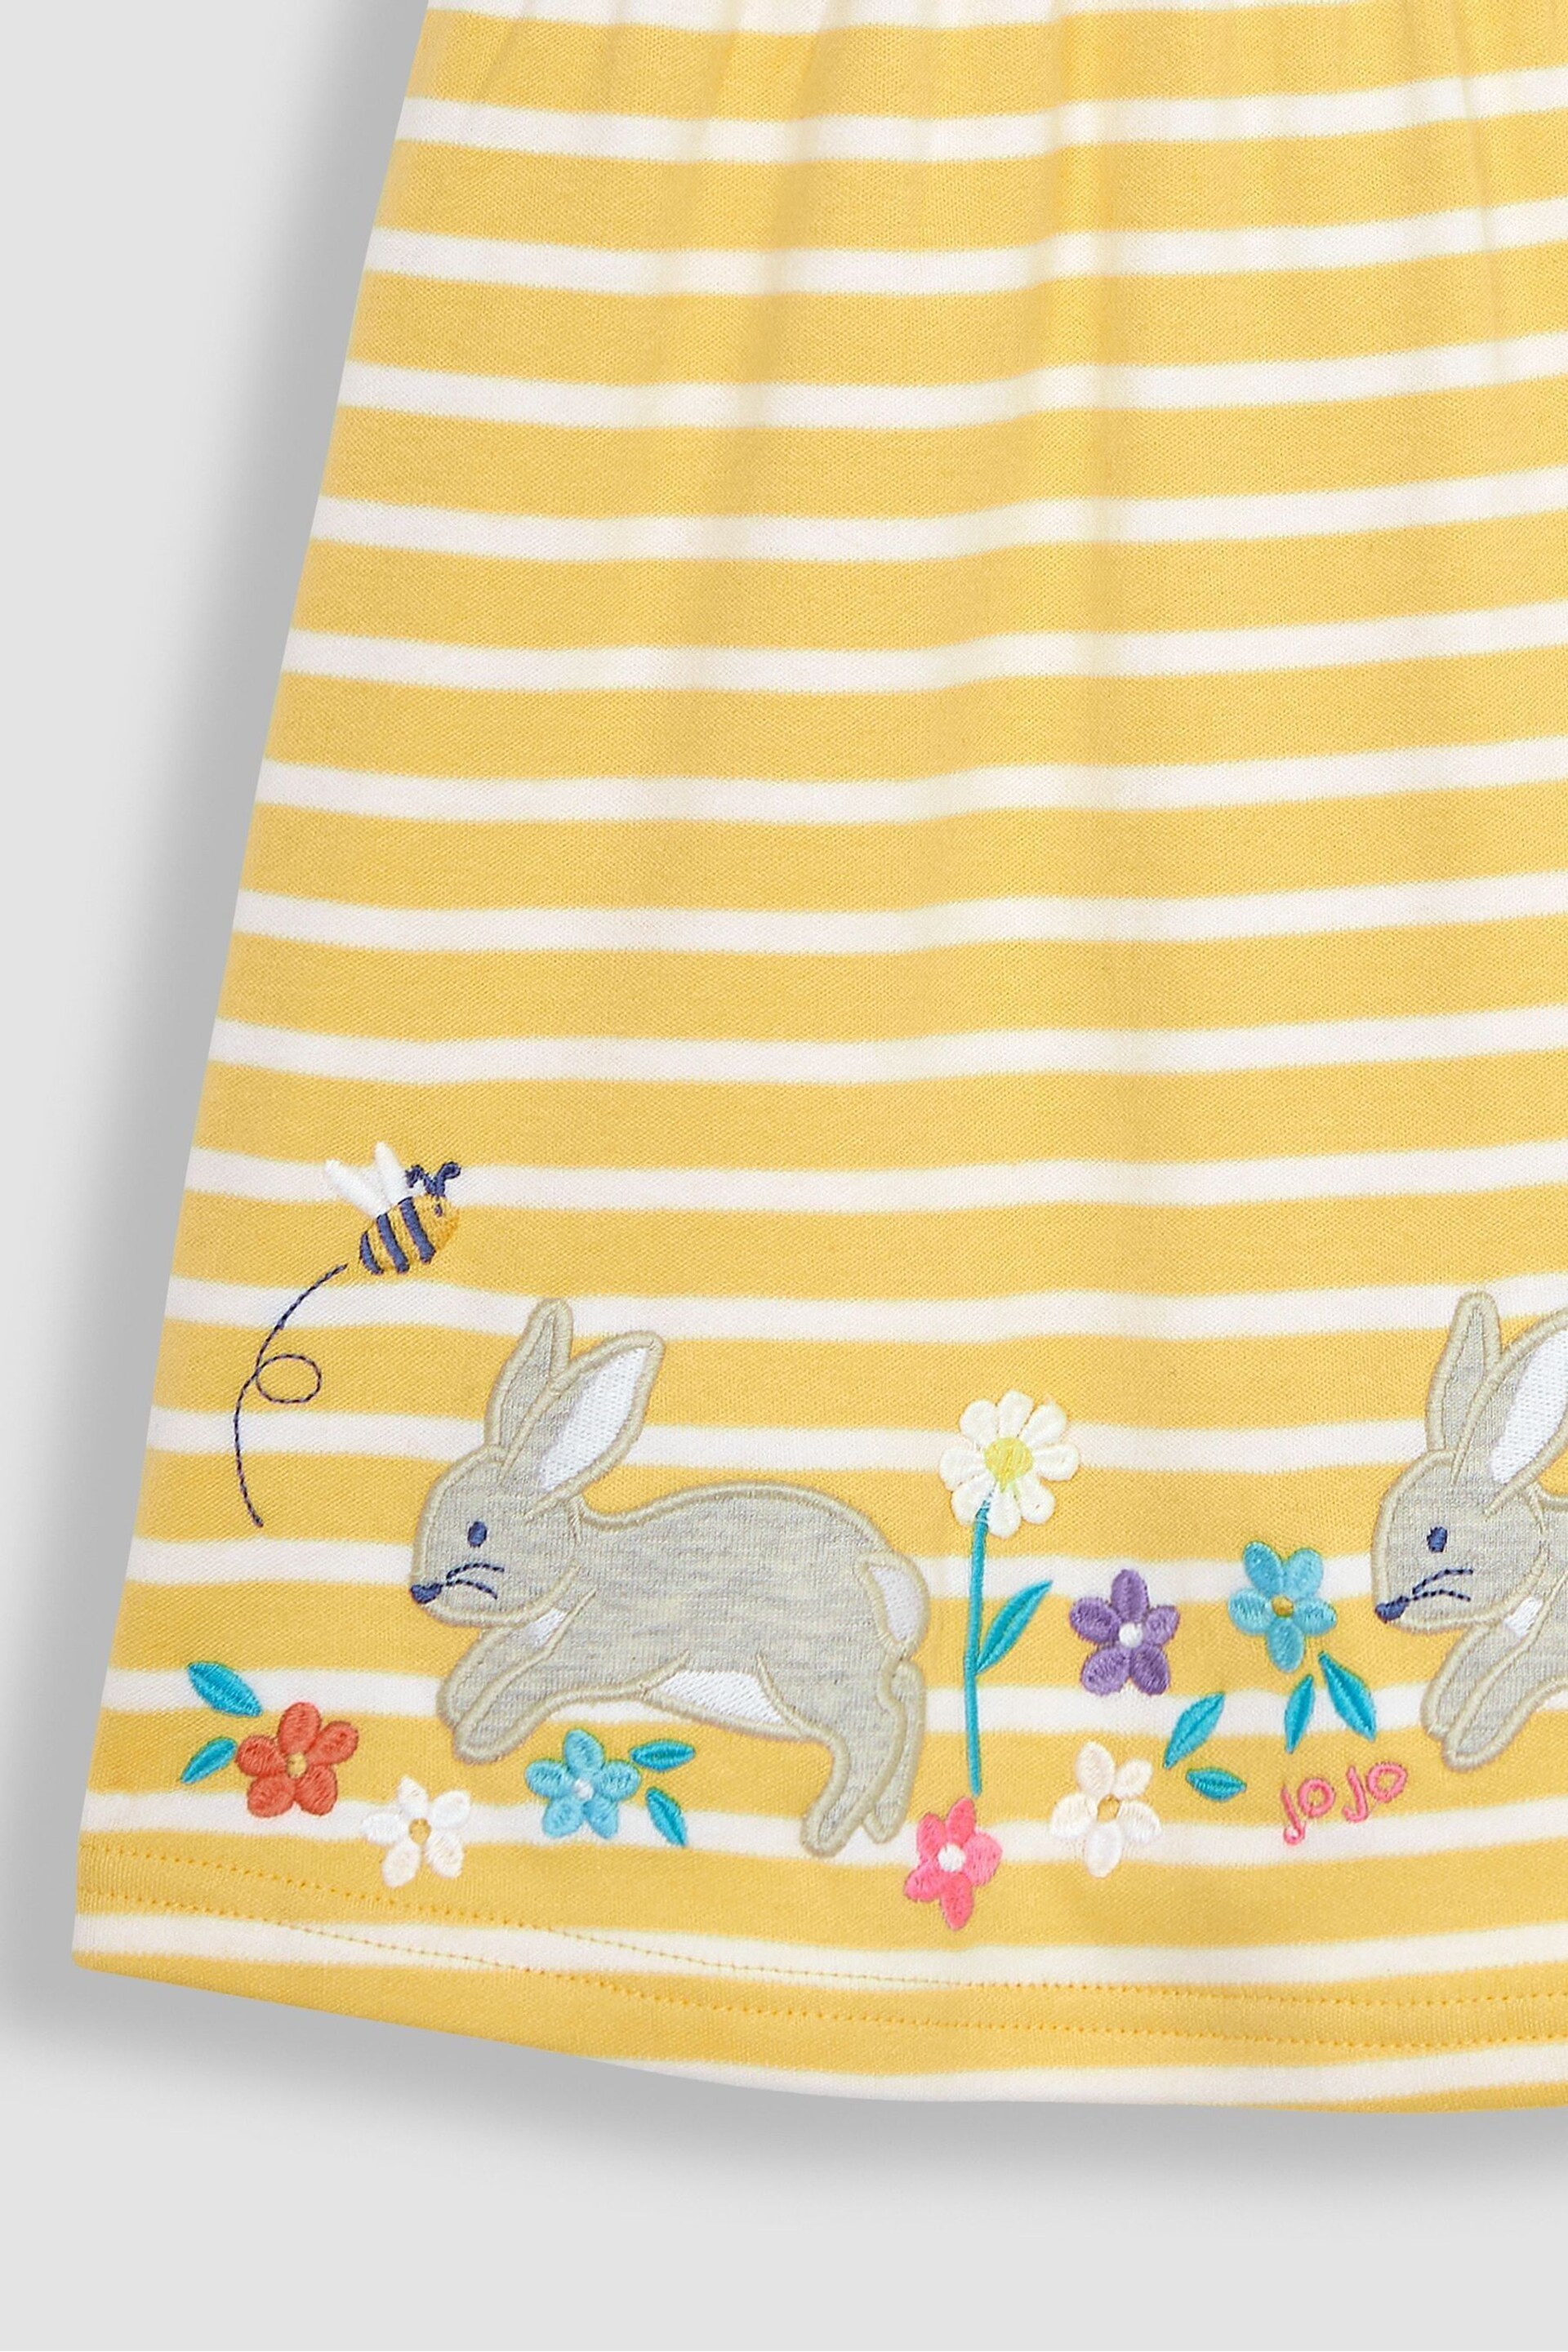 JoJo Maman Bébé Yellow Bunny Stripe Appliqué Button Front Jersey Dress - Image 4 of 5